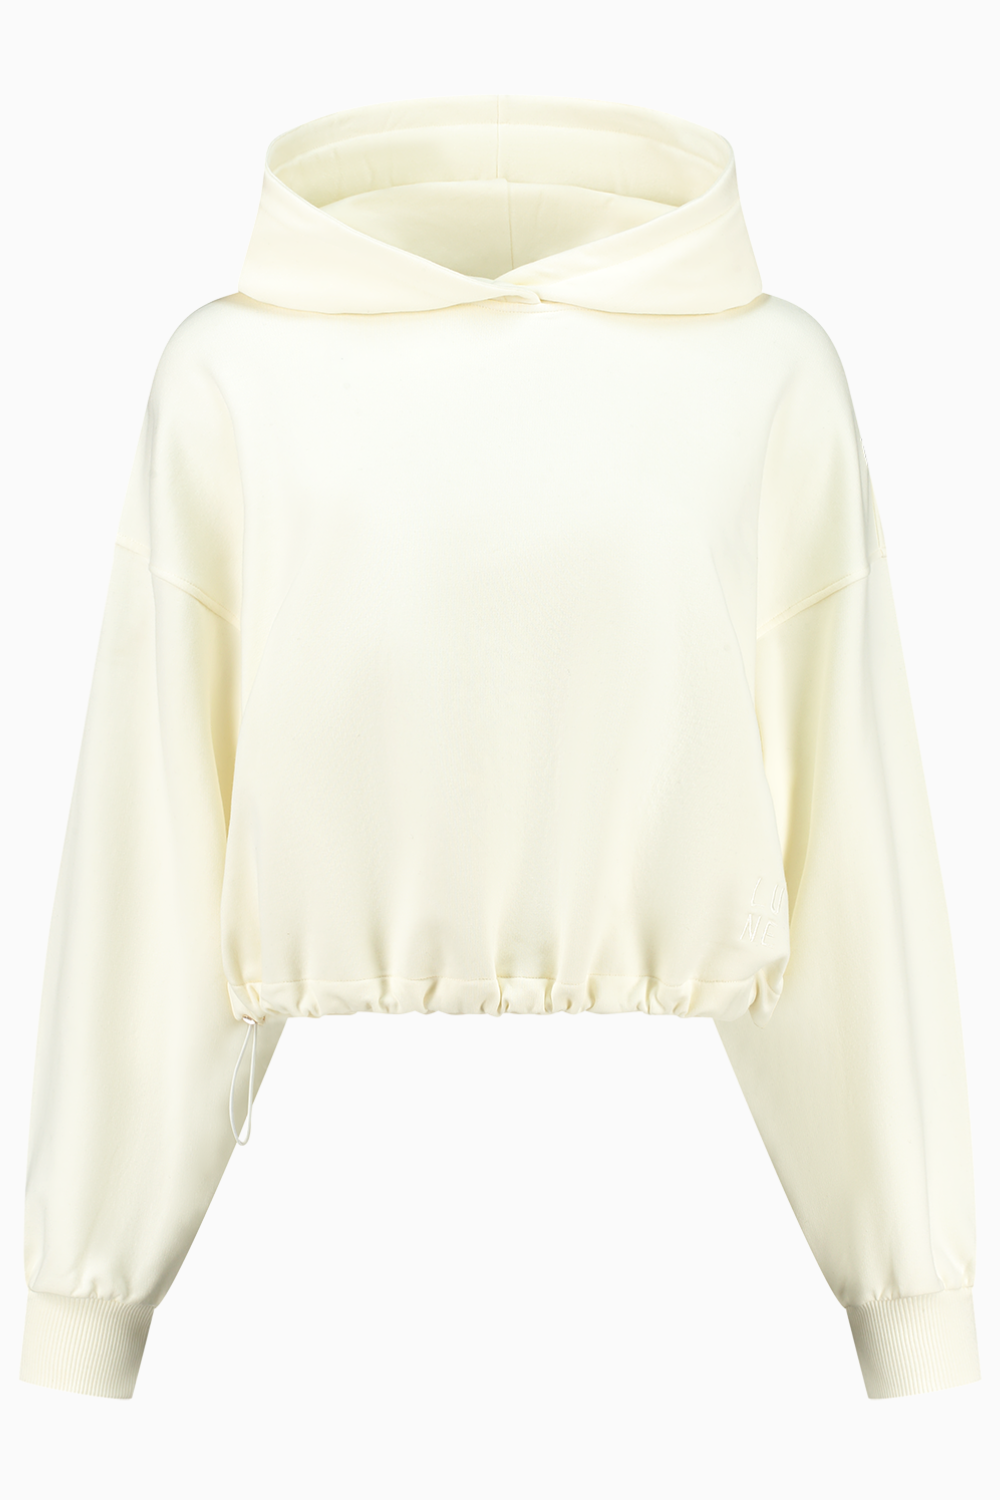 FINN COZY hoodie - Marshmellow